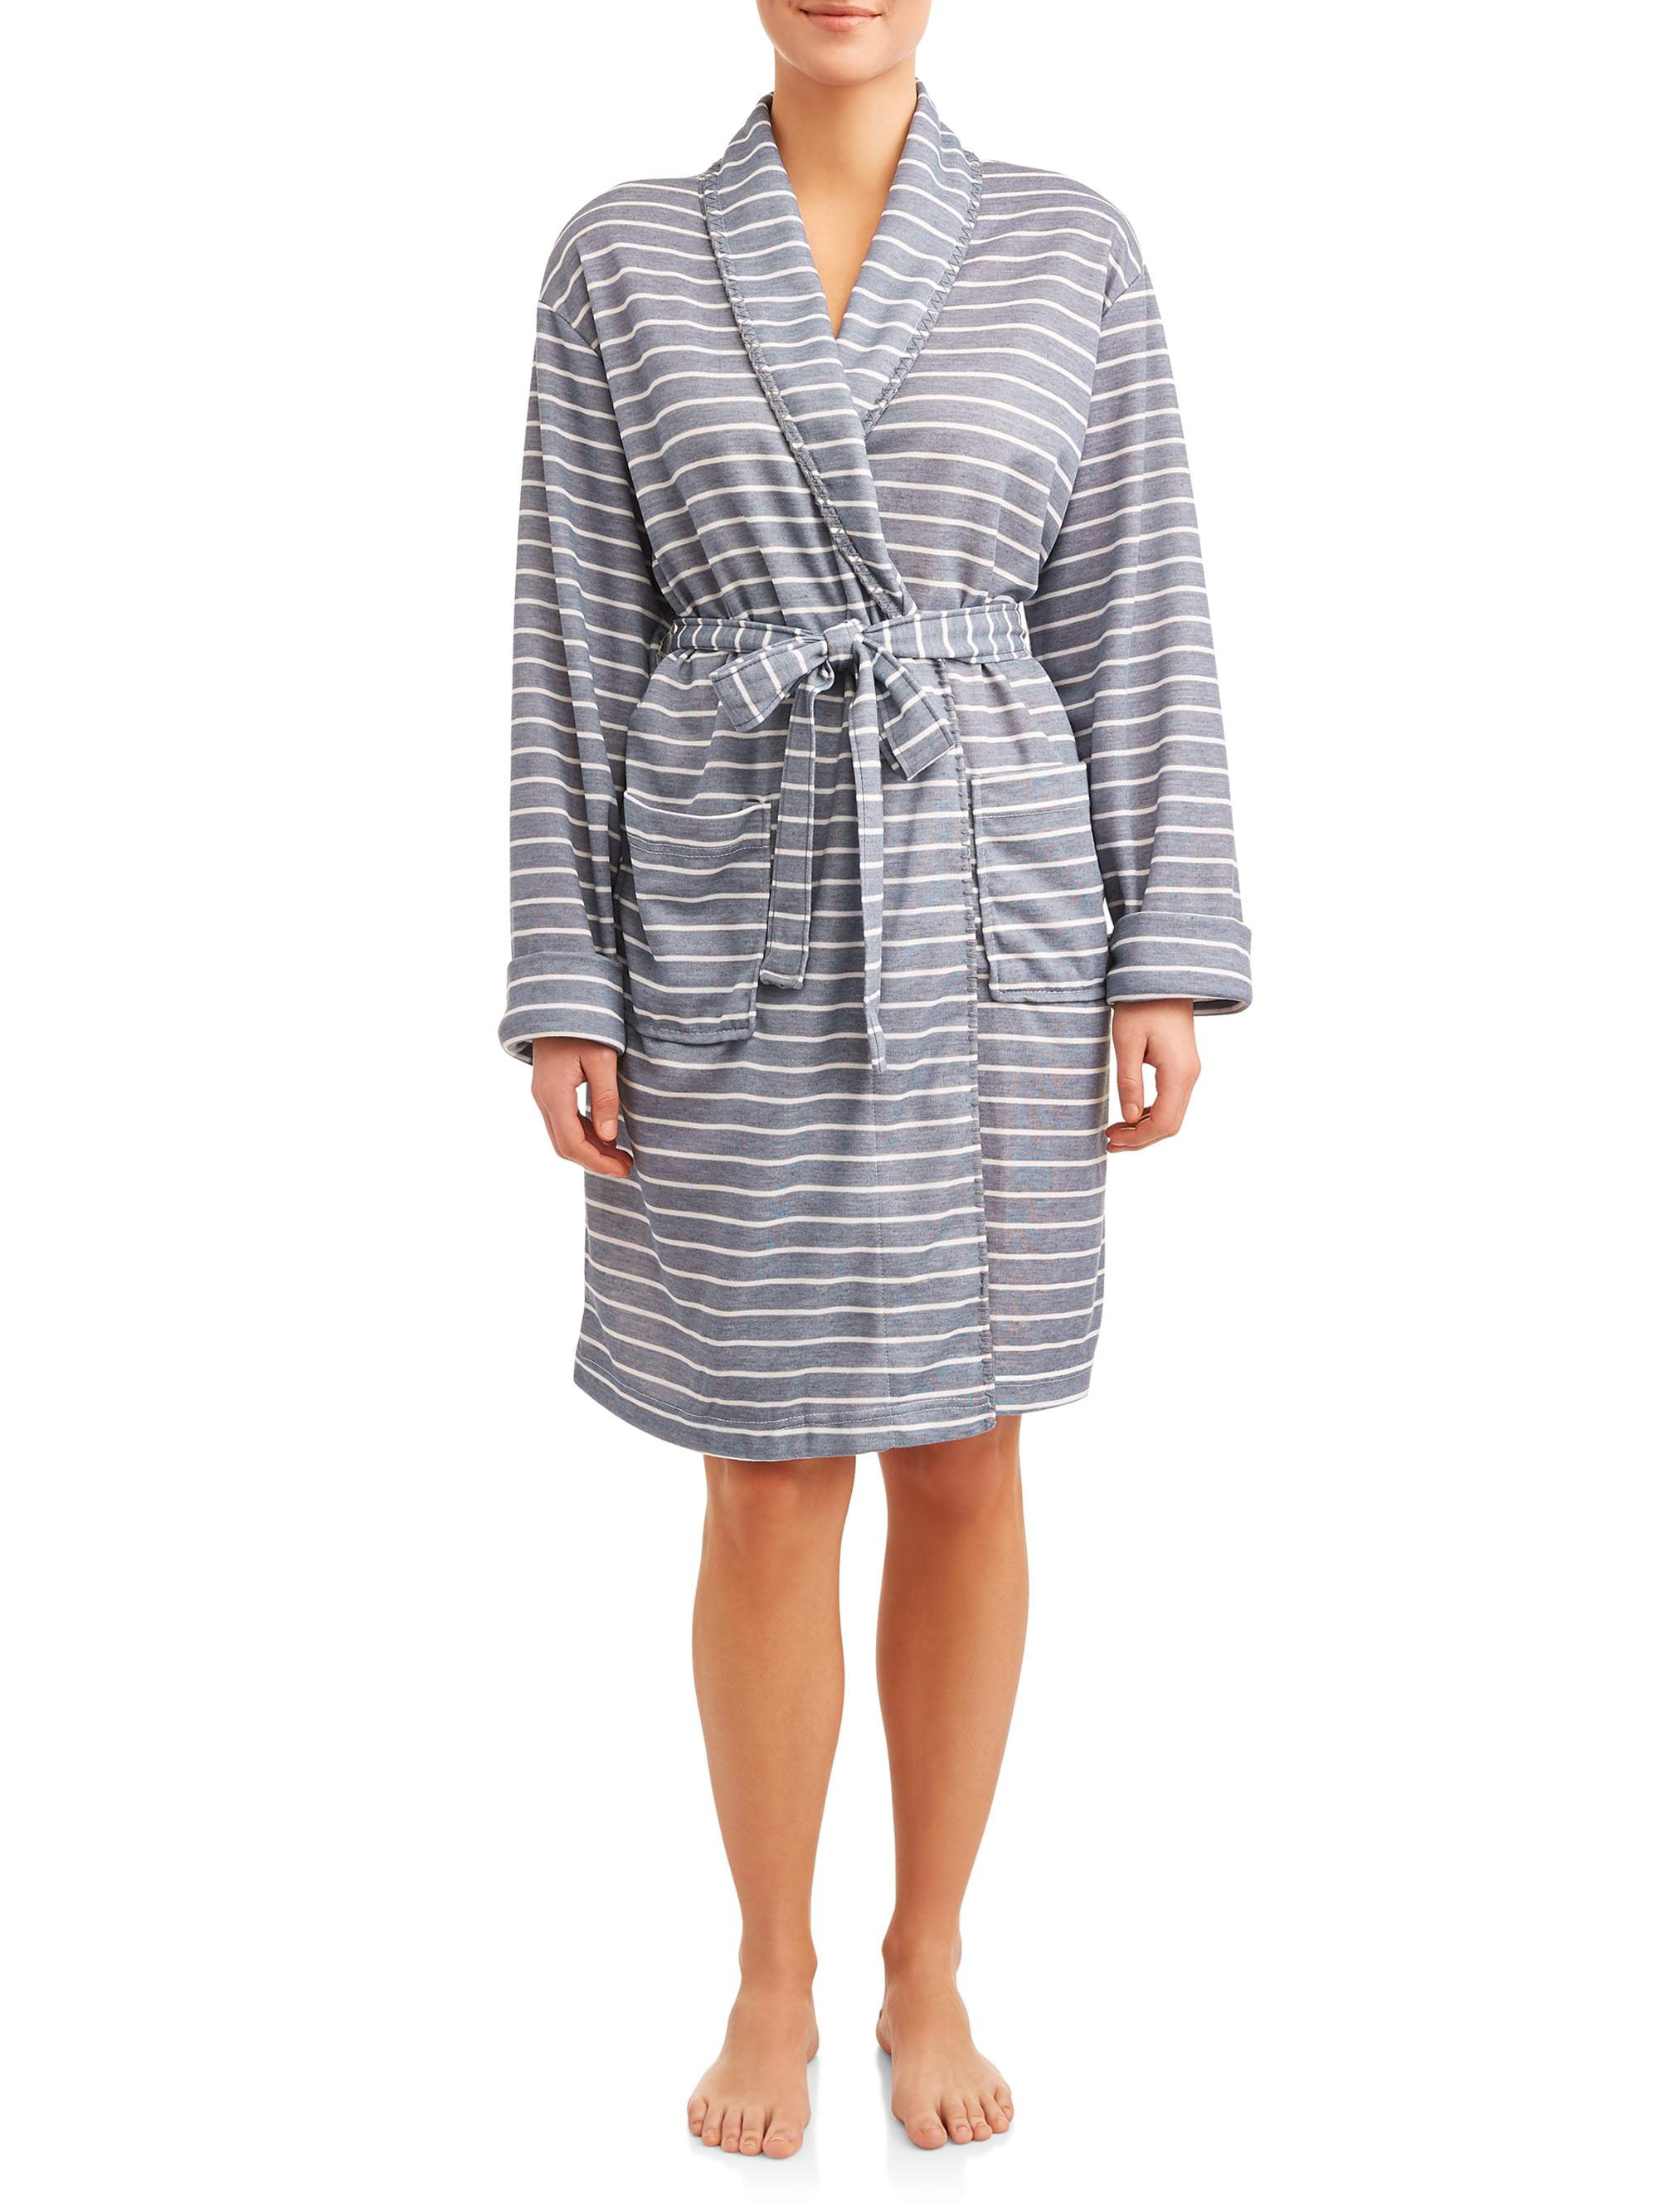 Amari – Jersey Knit Robe - Walmart.com